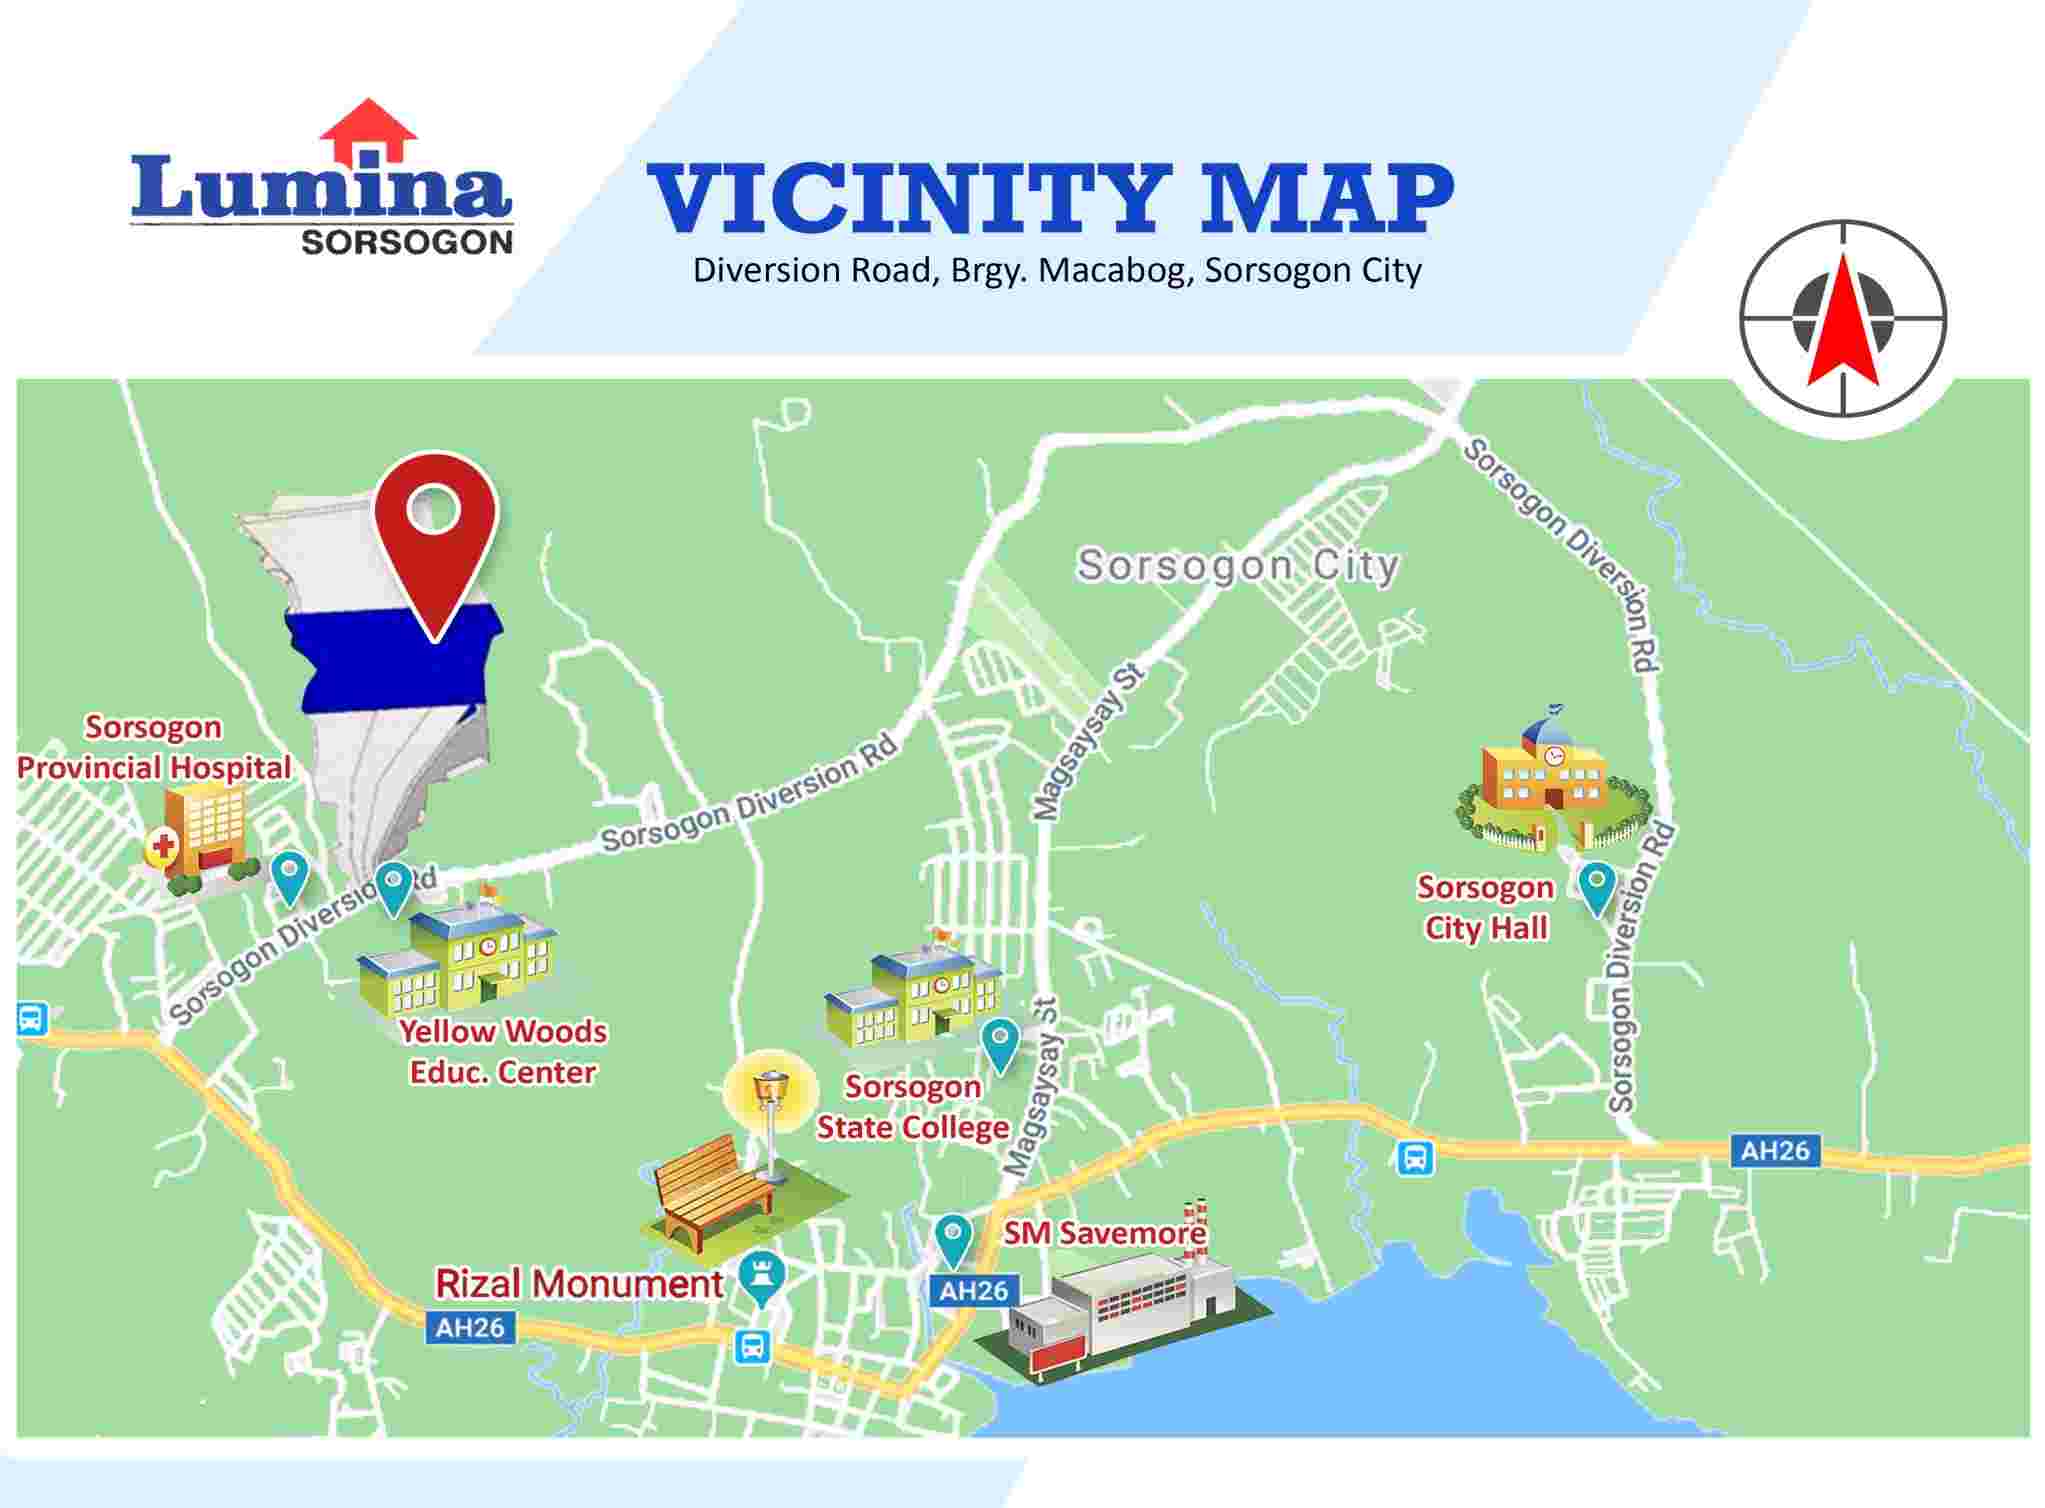 Vicinity-Map-sorsogon.jpeg